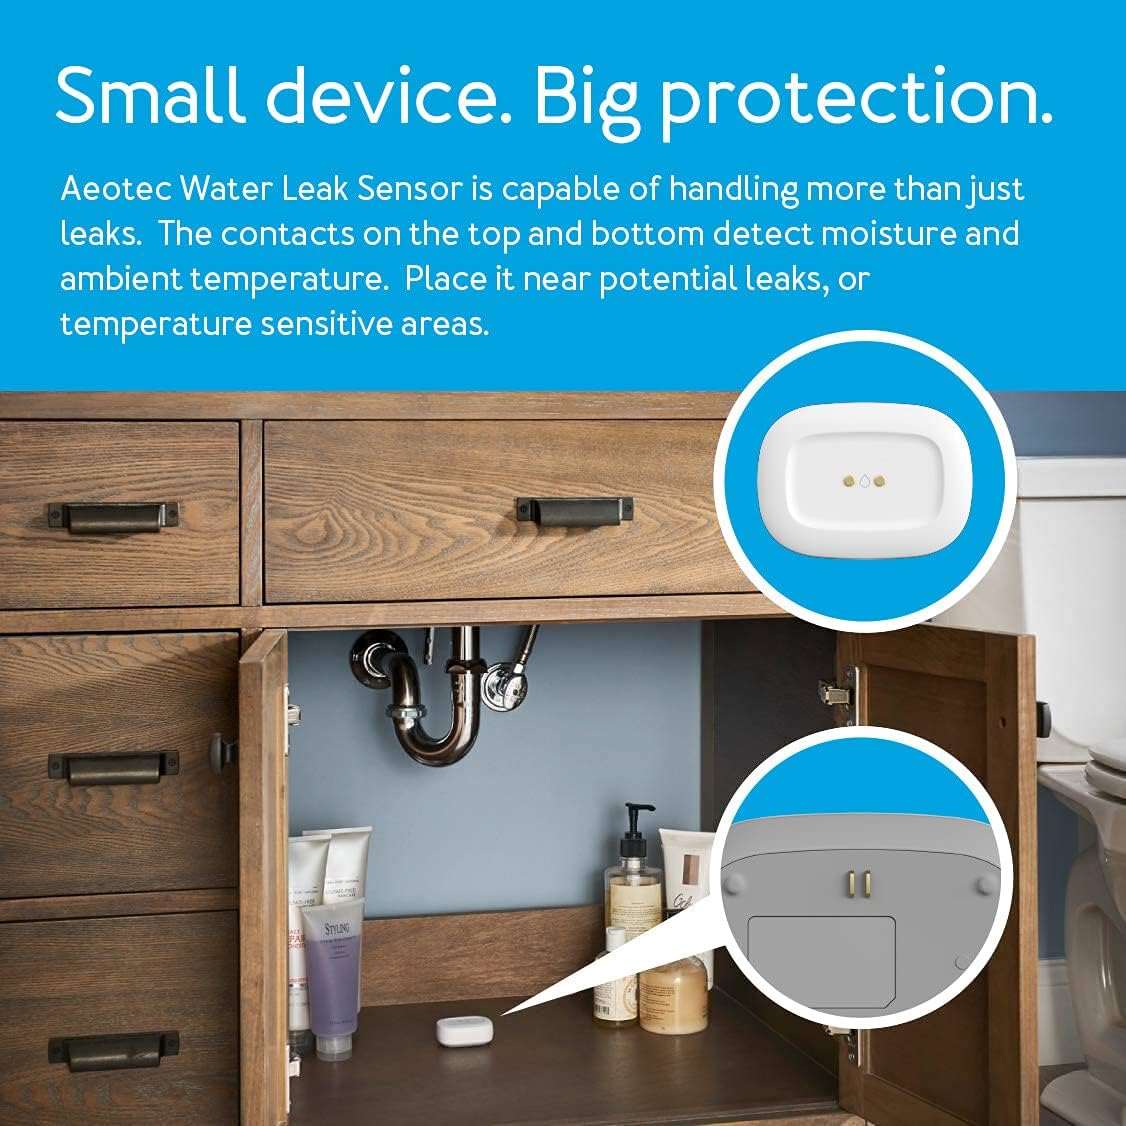 Aeotec SmartThings Zigbee Water Leak Sensor